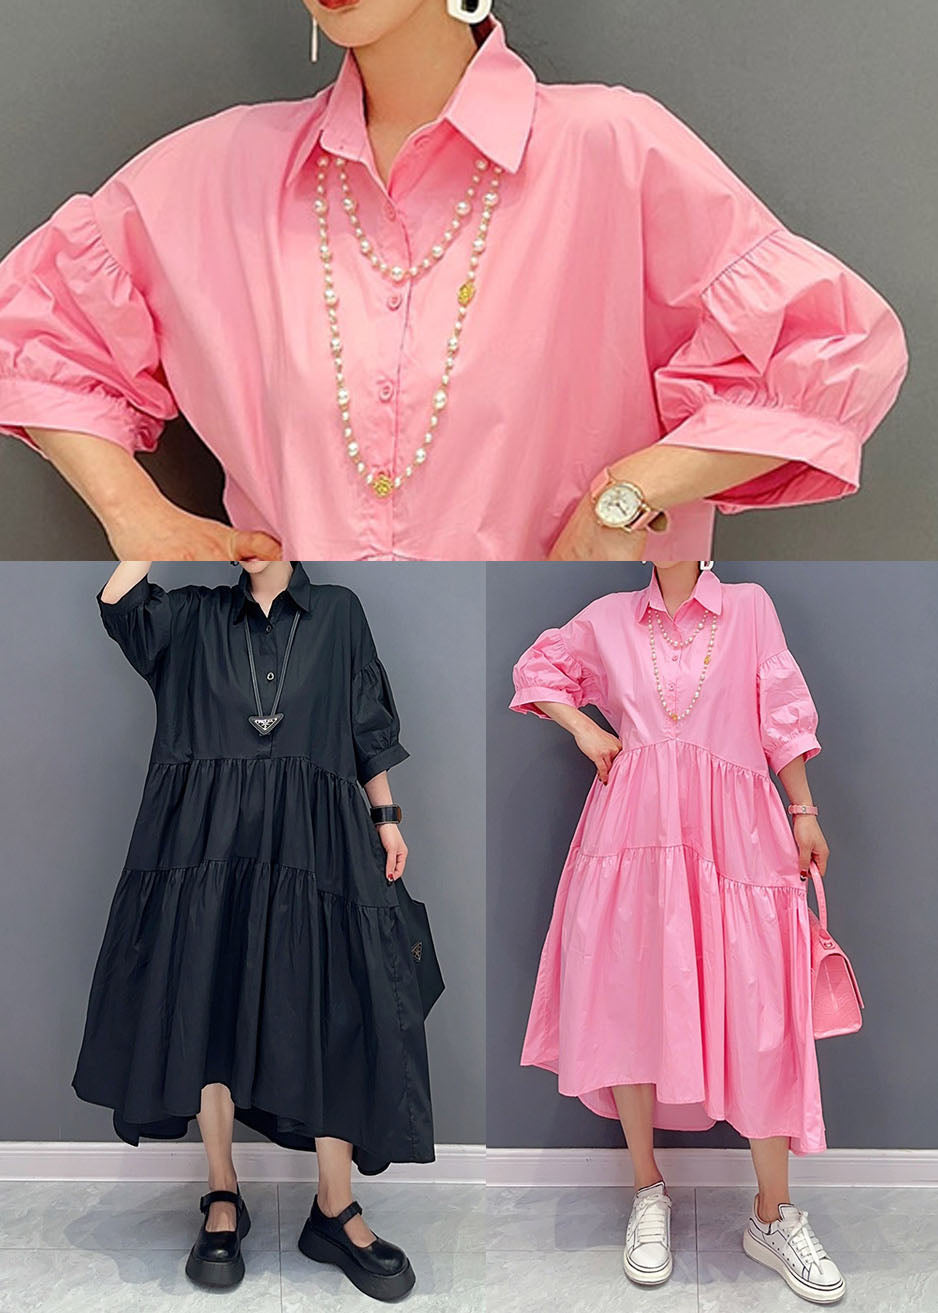 peopleterritory Bohemian Pink Peter Pan Collar Patchwork Cotton Dress Bracelet Sleeve LY1578